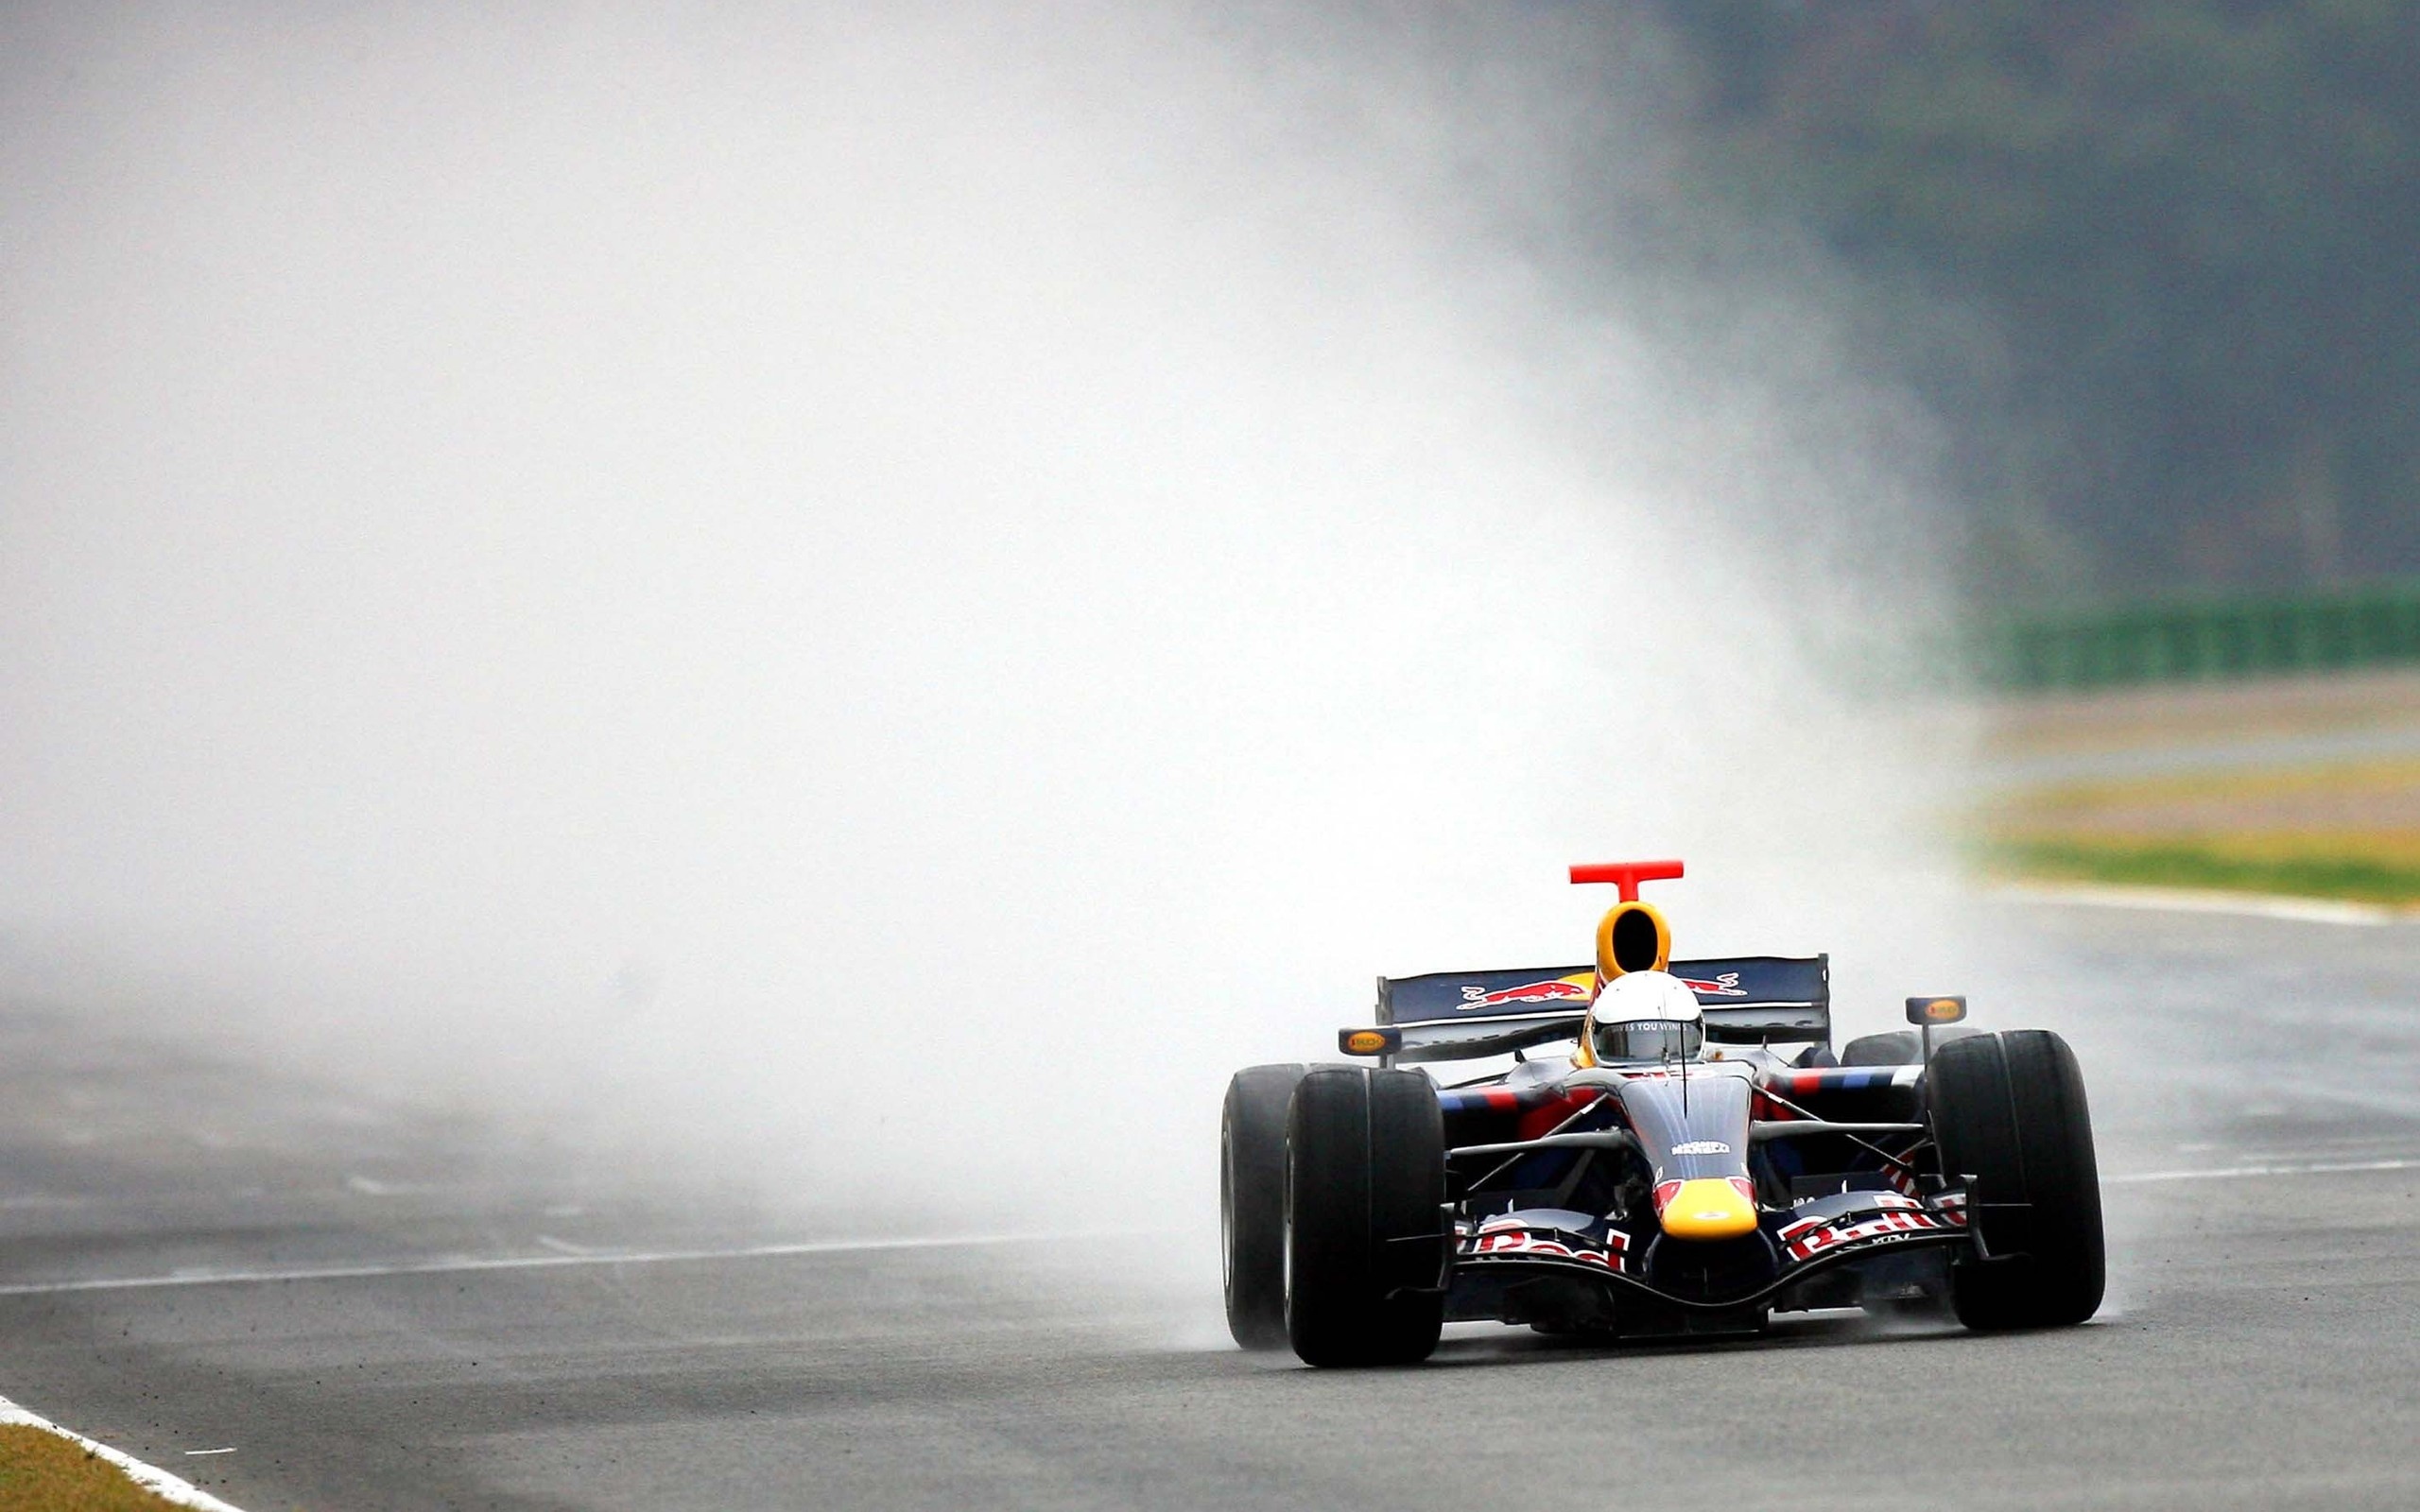 General 2560x1600 car Formula 1 race tracks Red Bull Racing race cars sport smoke helmet vehicle motorsport